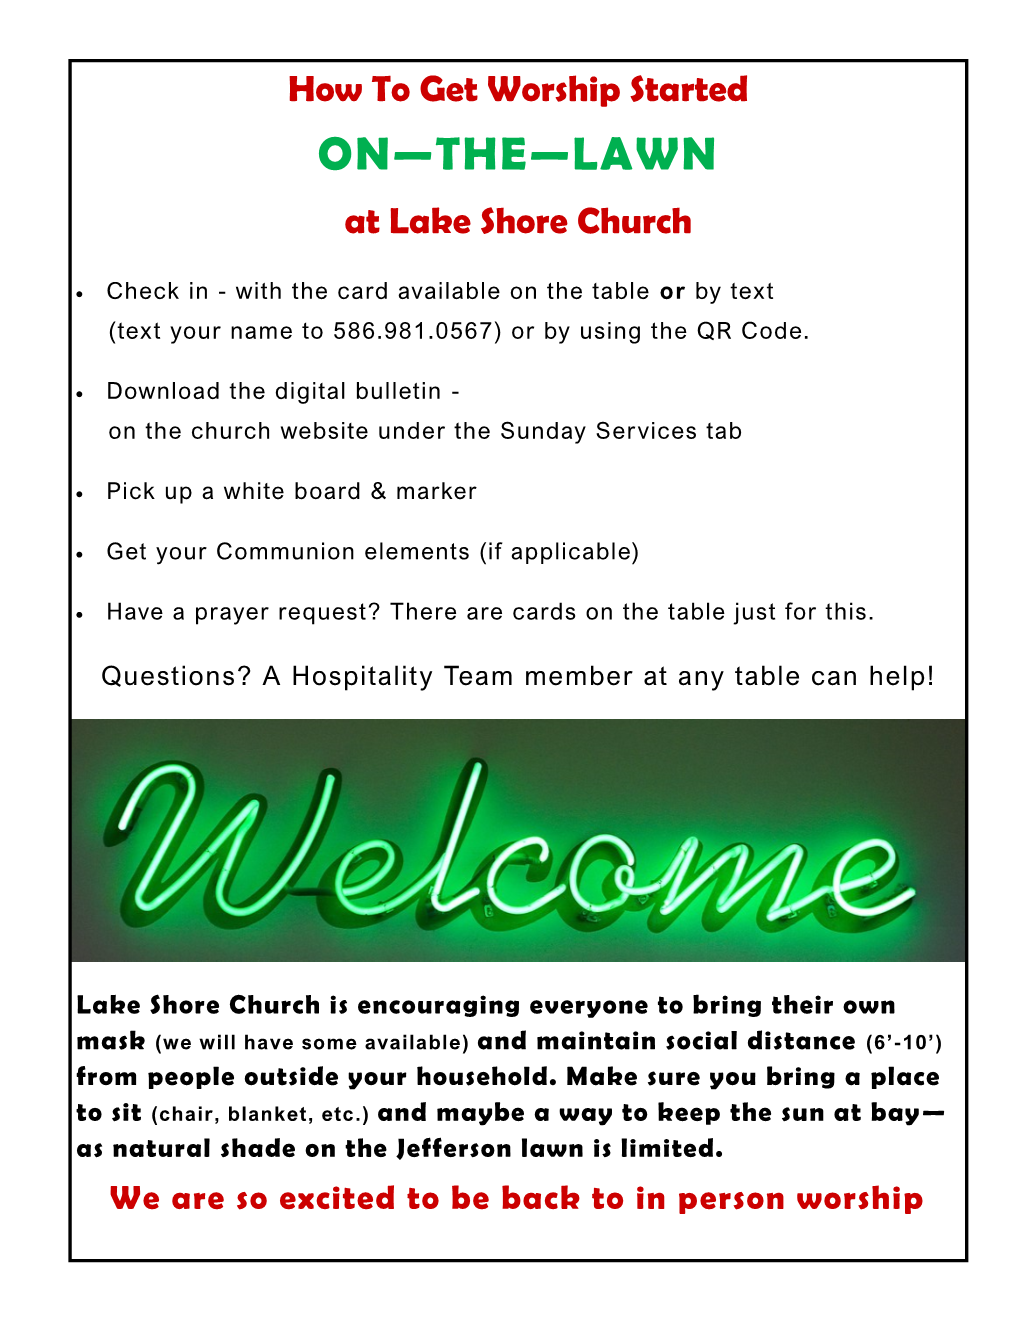 ON—THE—LAWN at Lake Shore Church